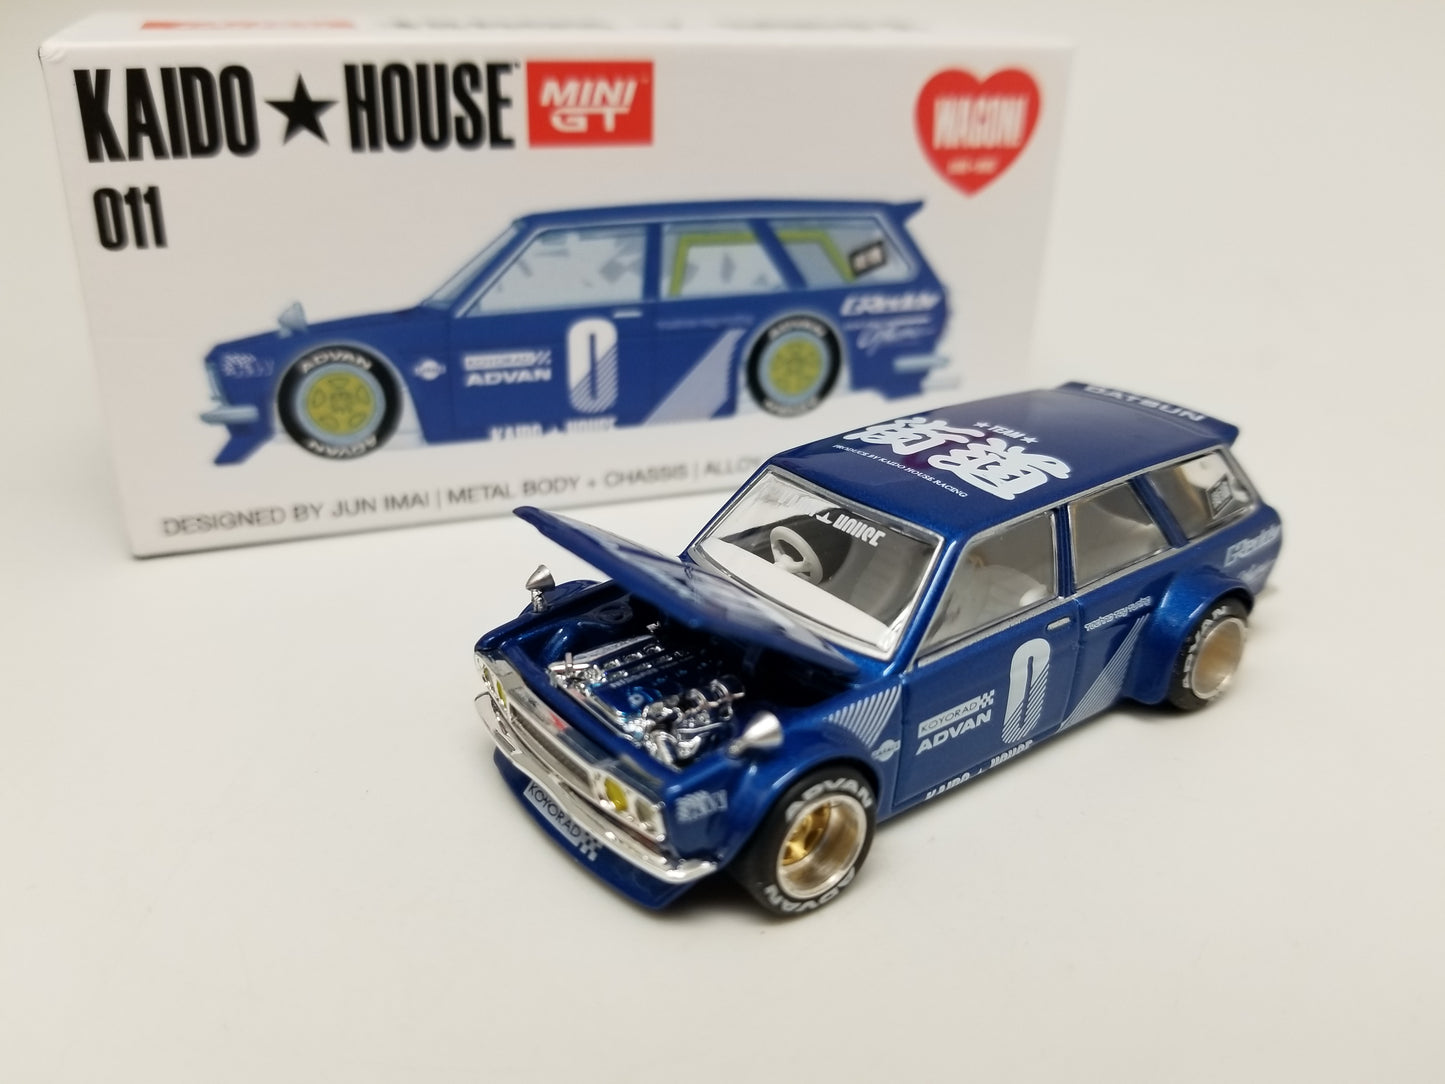 Kaido House 011 MiniGT - Datsun 510 Wagon - BLUE